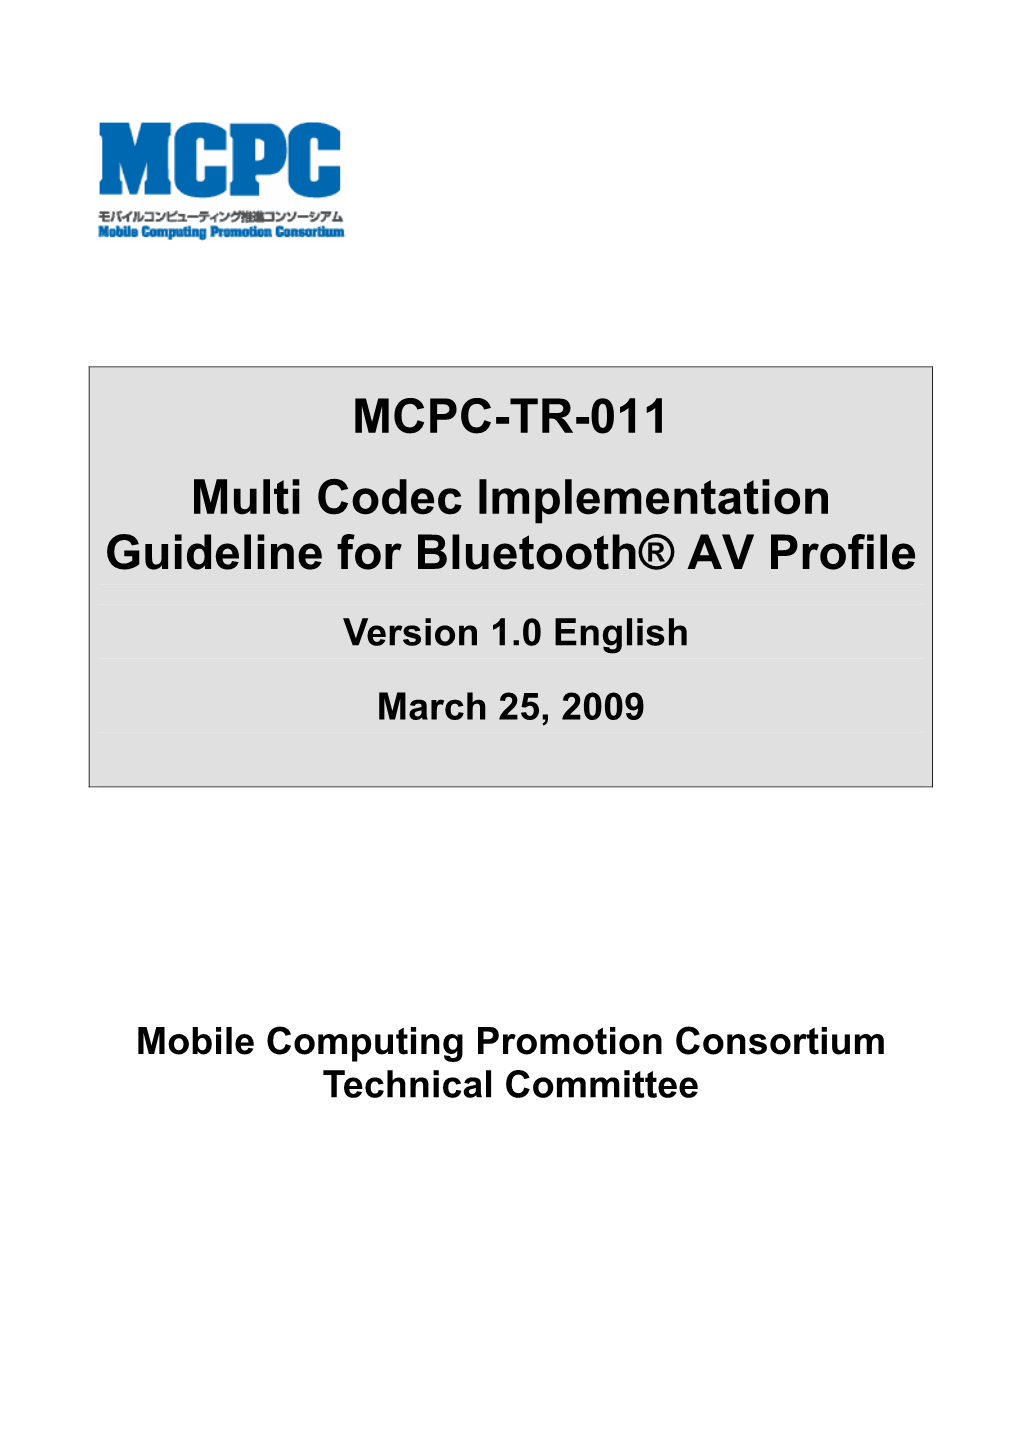 MCPC-TR-011 Multi Codec Implementation Guideline for Bluetooth® AV Profile